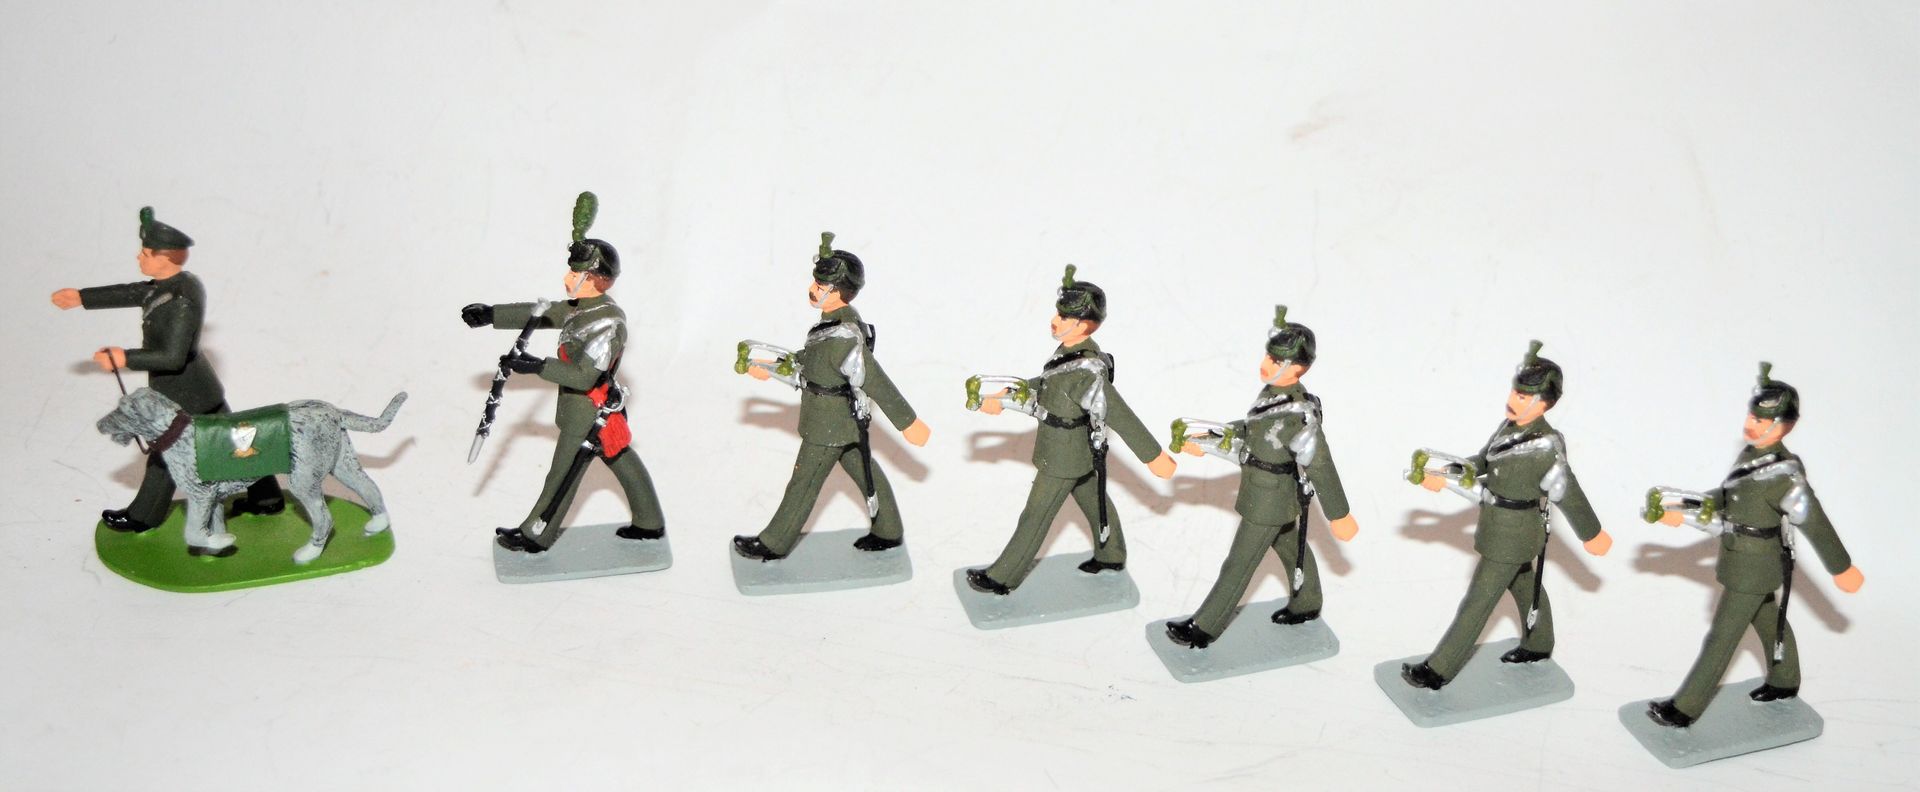 Null M. TABONY：爱尔兰：7名步兵在阅兵式上，带着团里的吉祥物狗。1990s.新的条件。